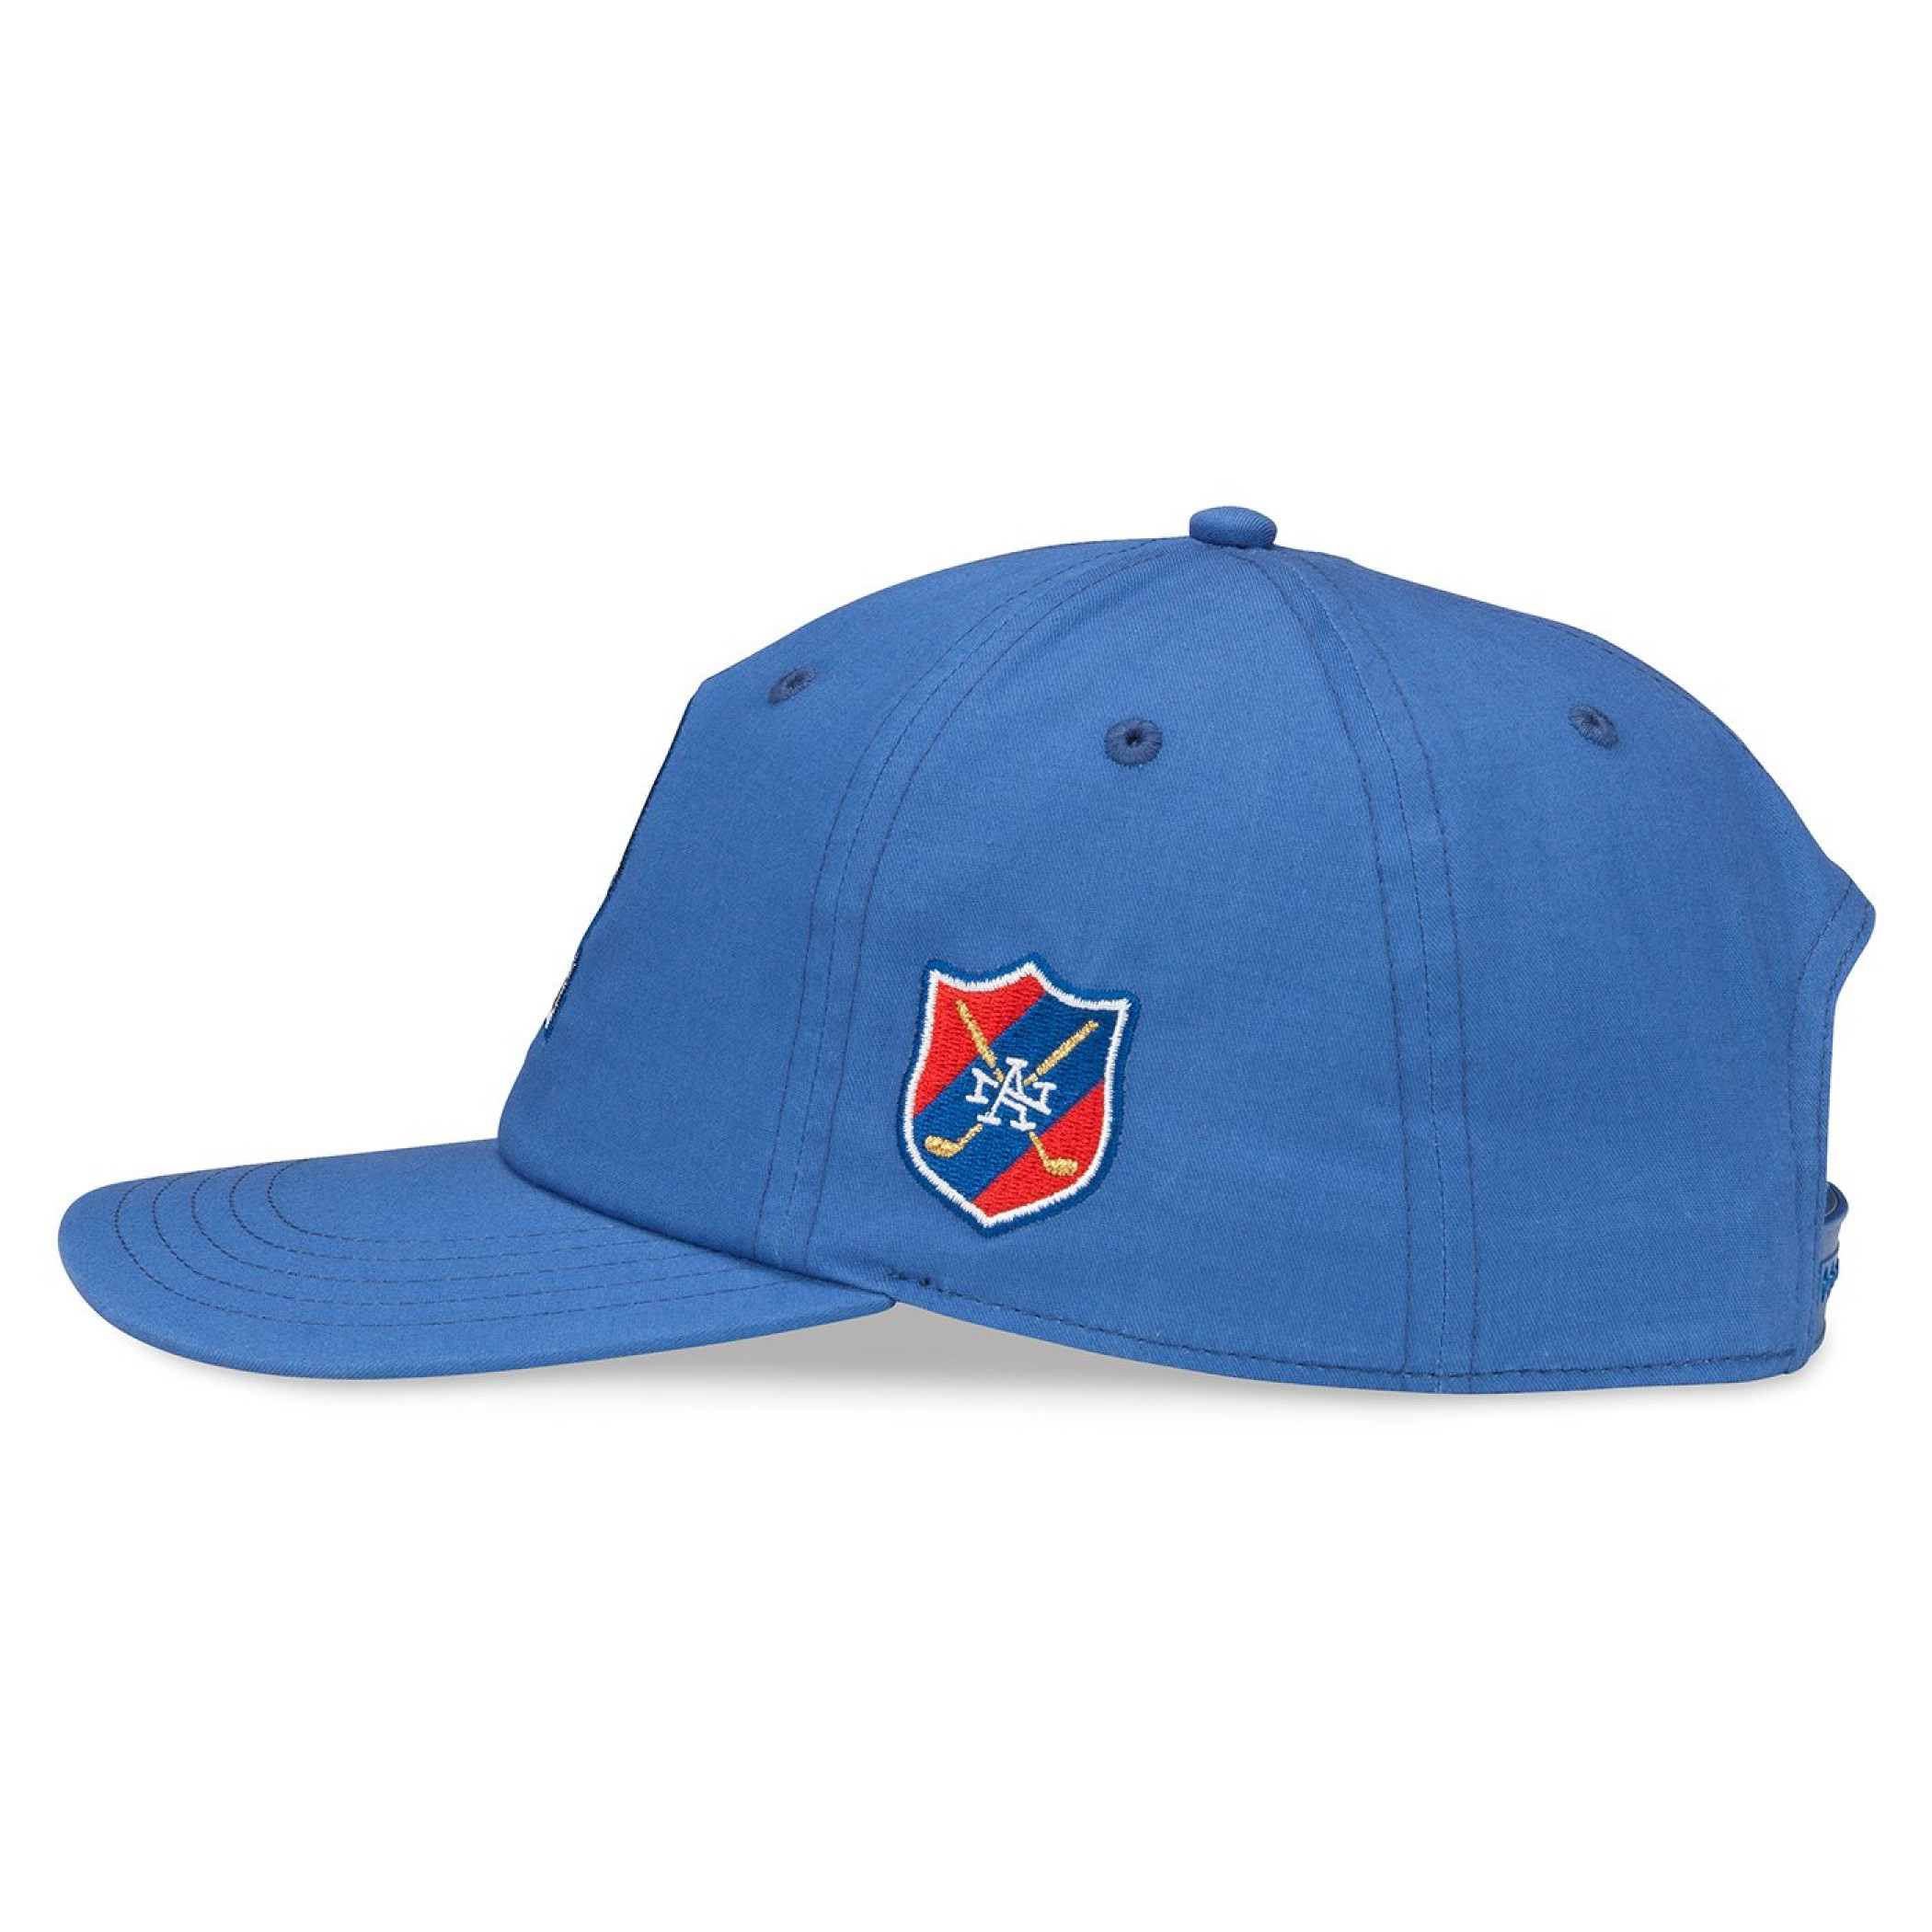 Pabst Blue Ribbon Beer Embroidered Logo Adjustable Hat